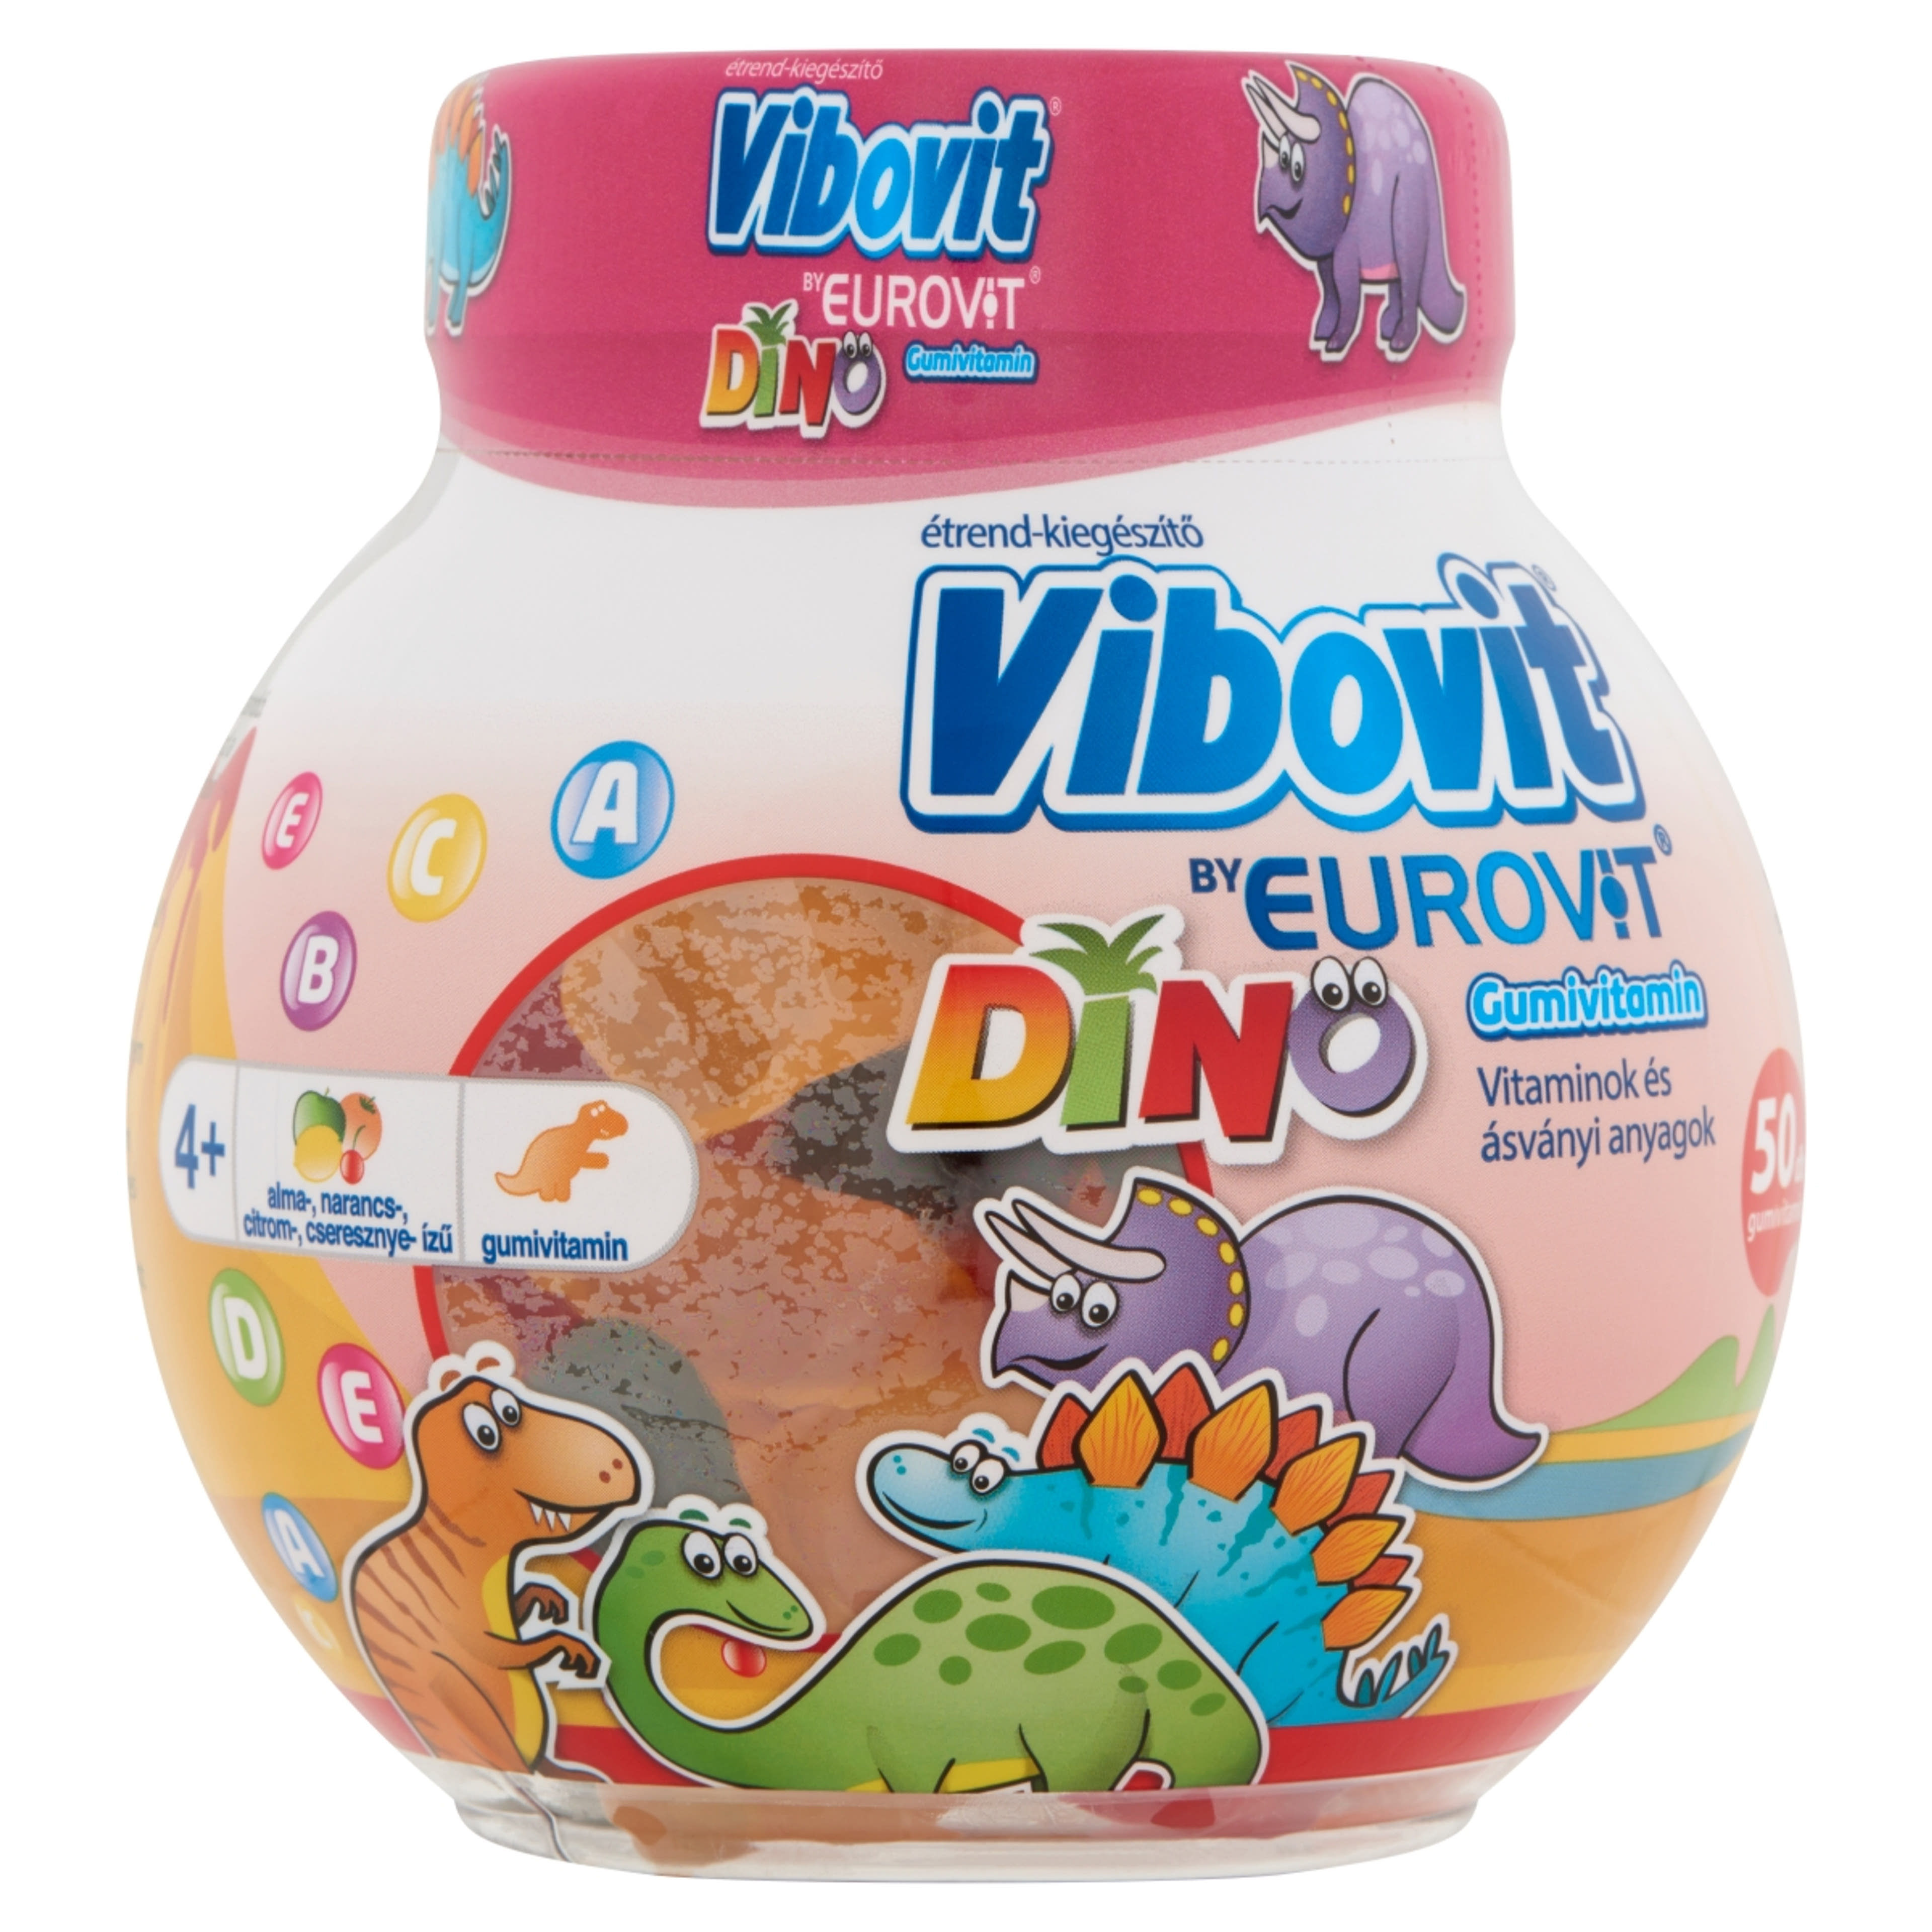 Vibovit BY EUROVIT Dino Gyümölcsös Ízű Gumivitamin - 50 db-1